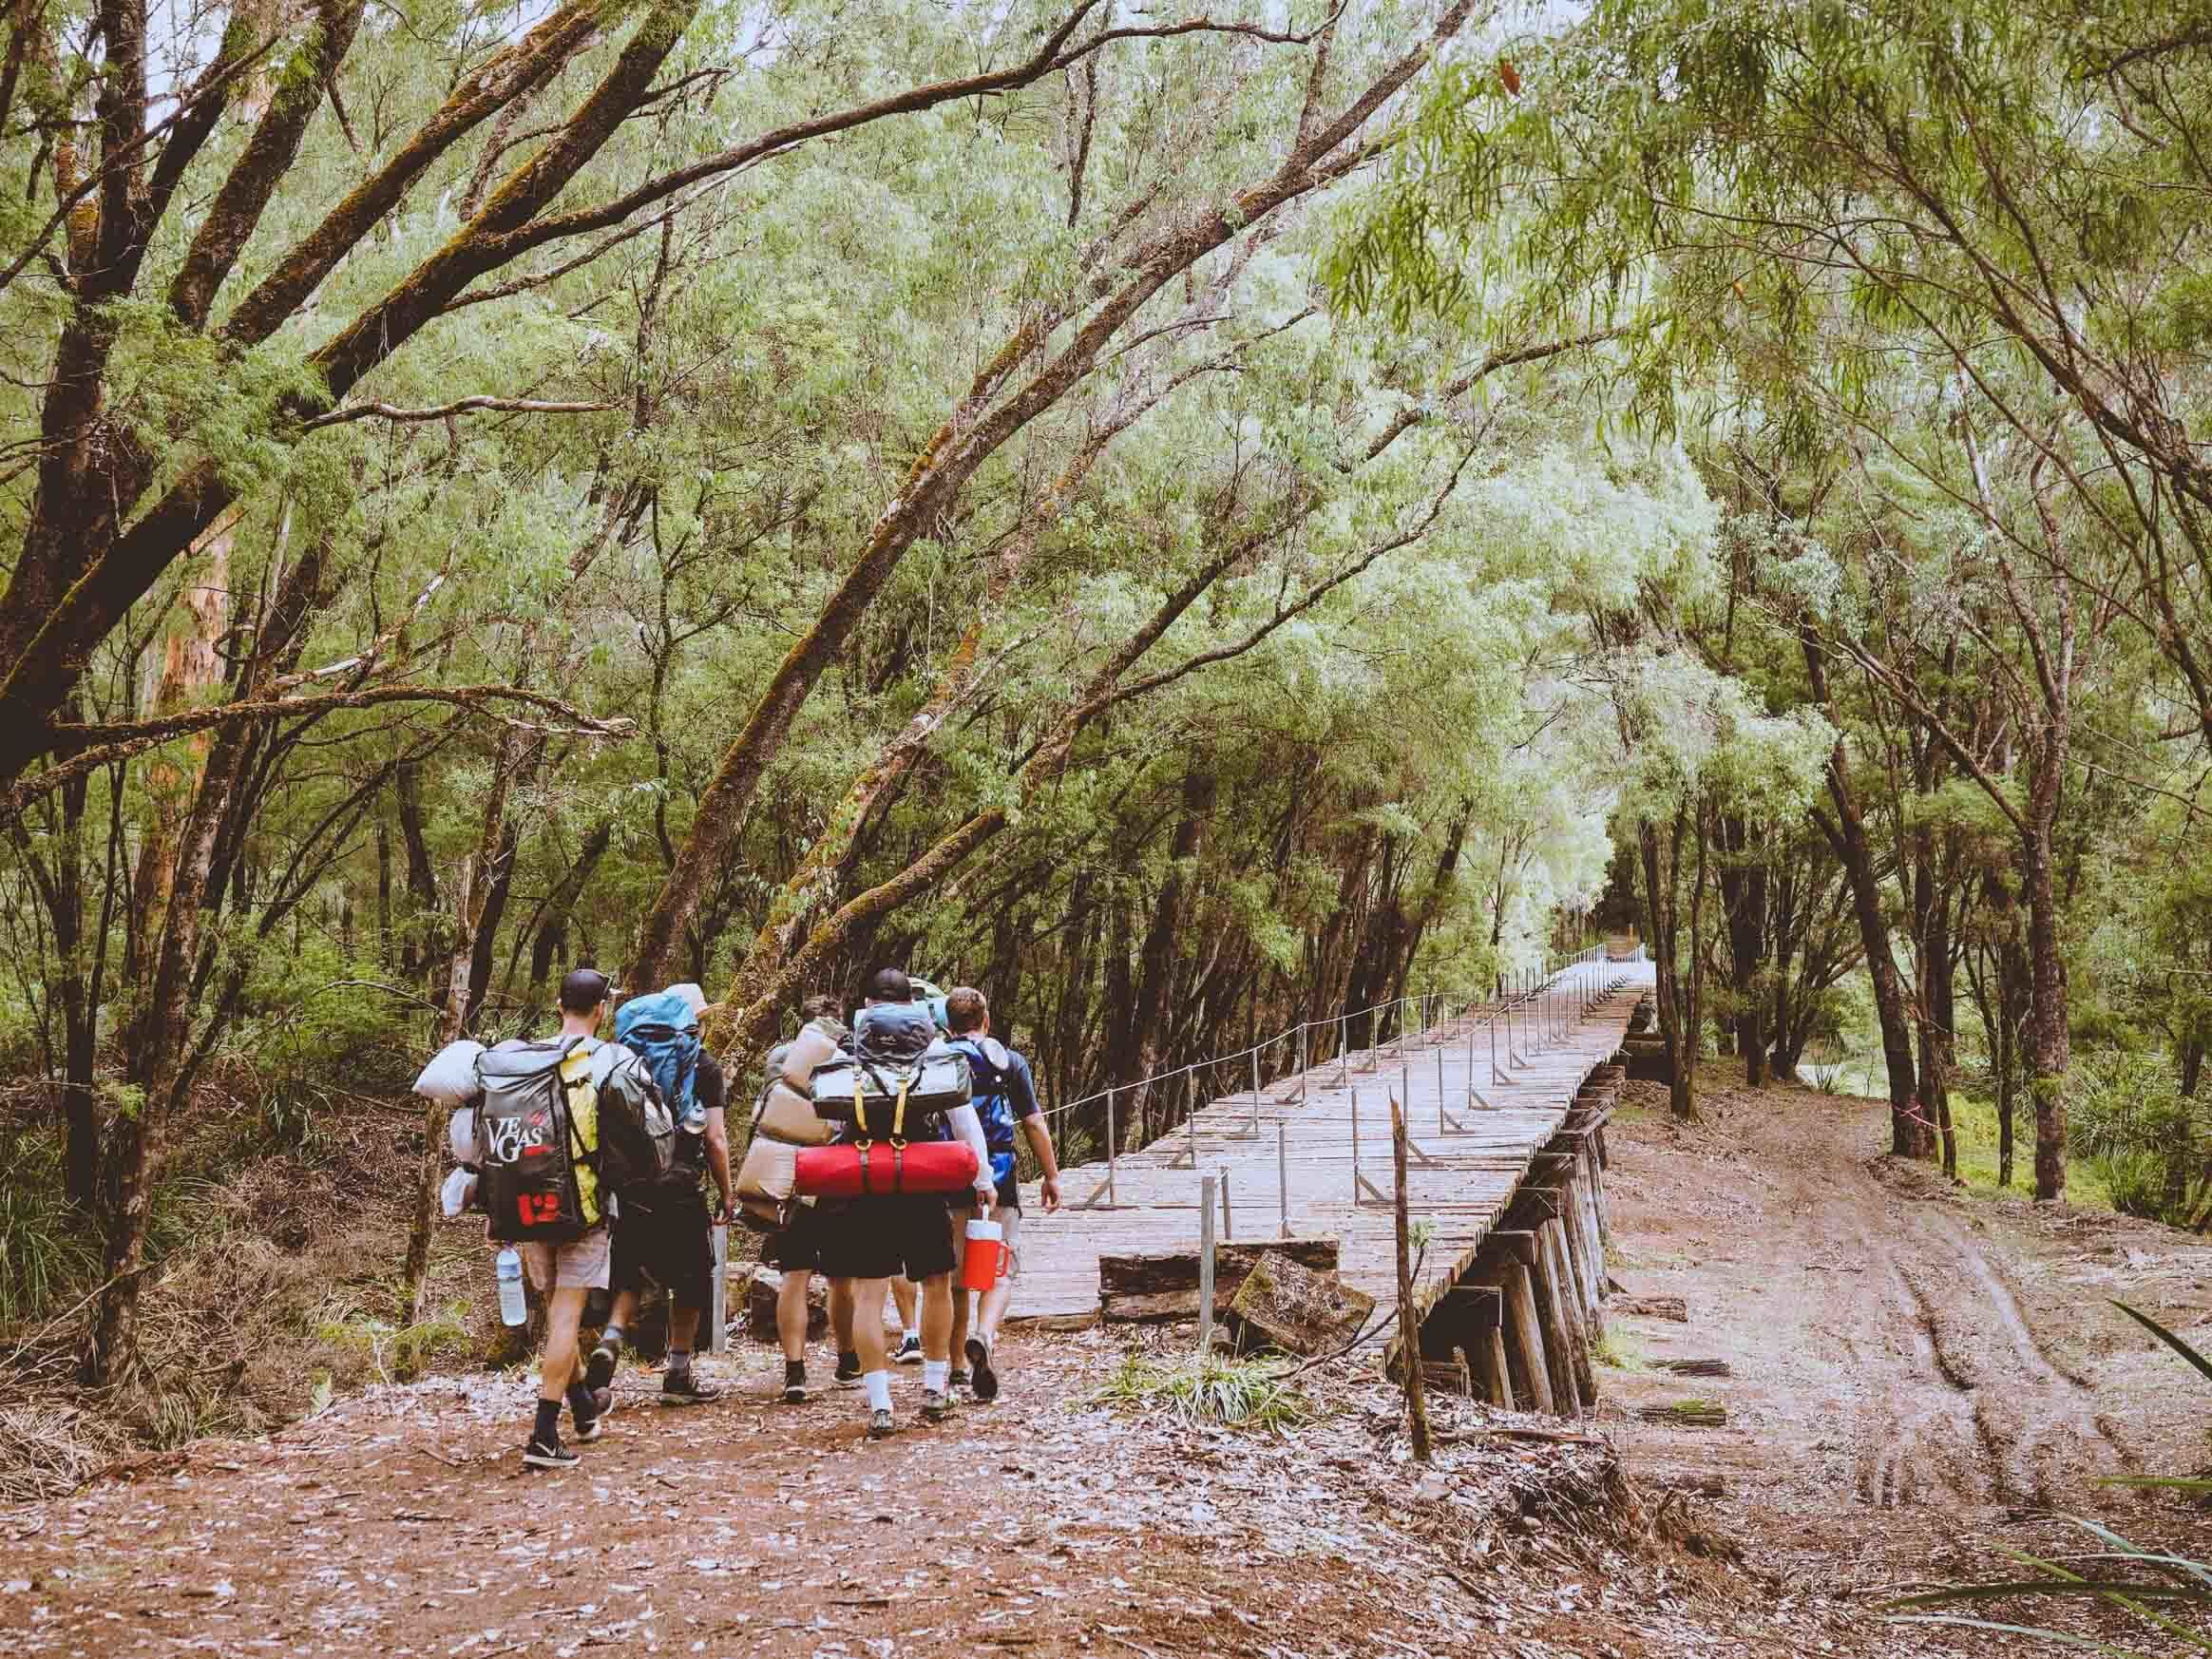 Chris McDiarmid Bibbulmun Track WA Perth hiking backpack bridge